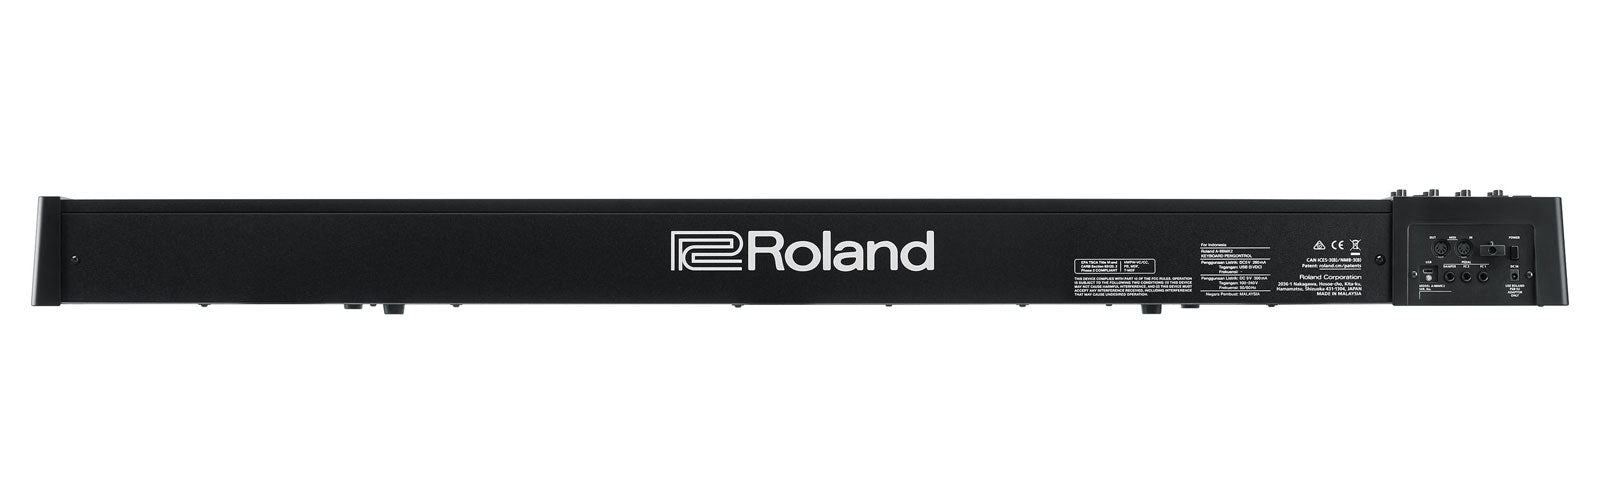 Roland A-88 MKII 88-key Keyboard Controlle